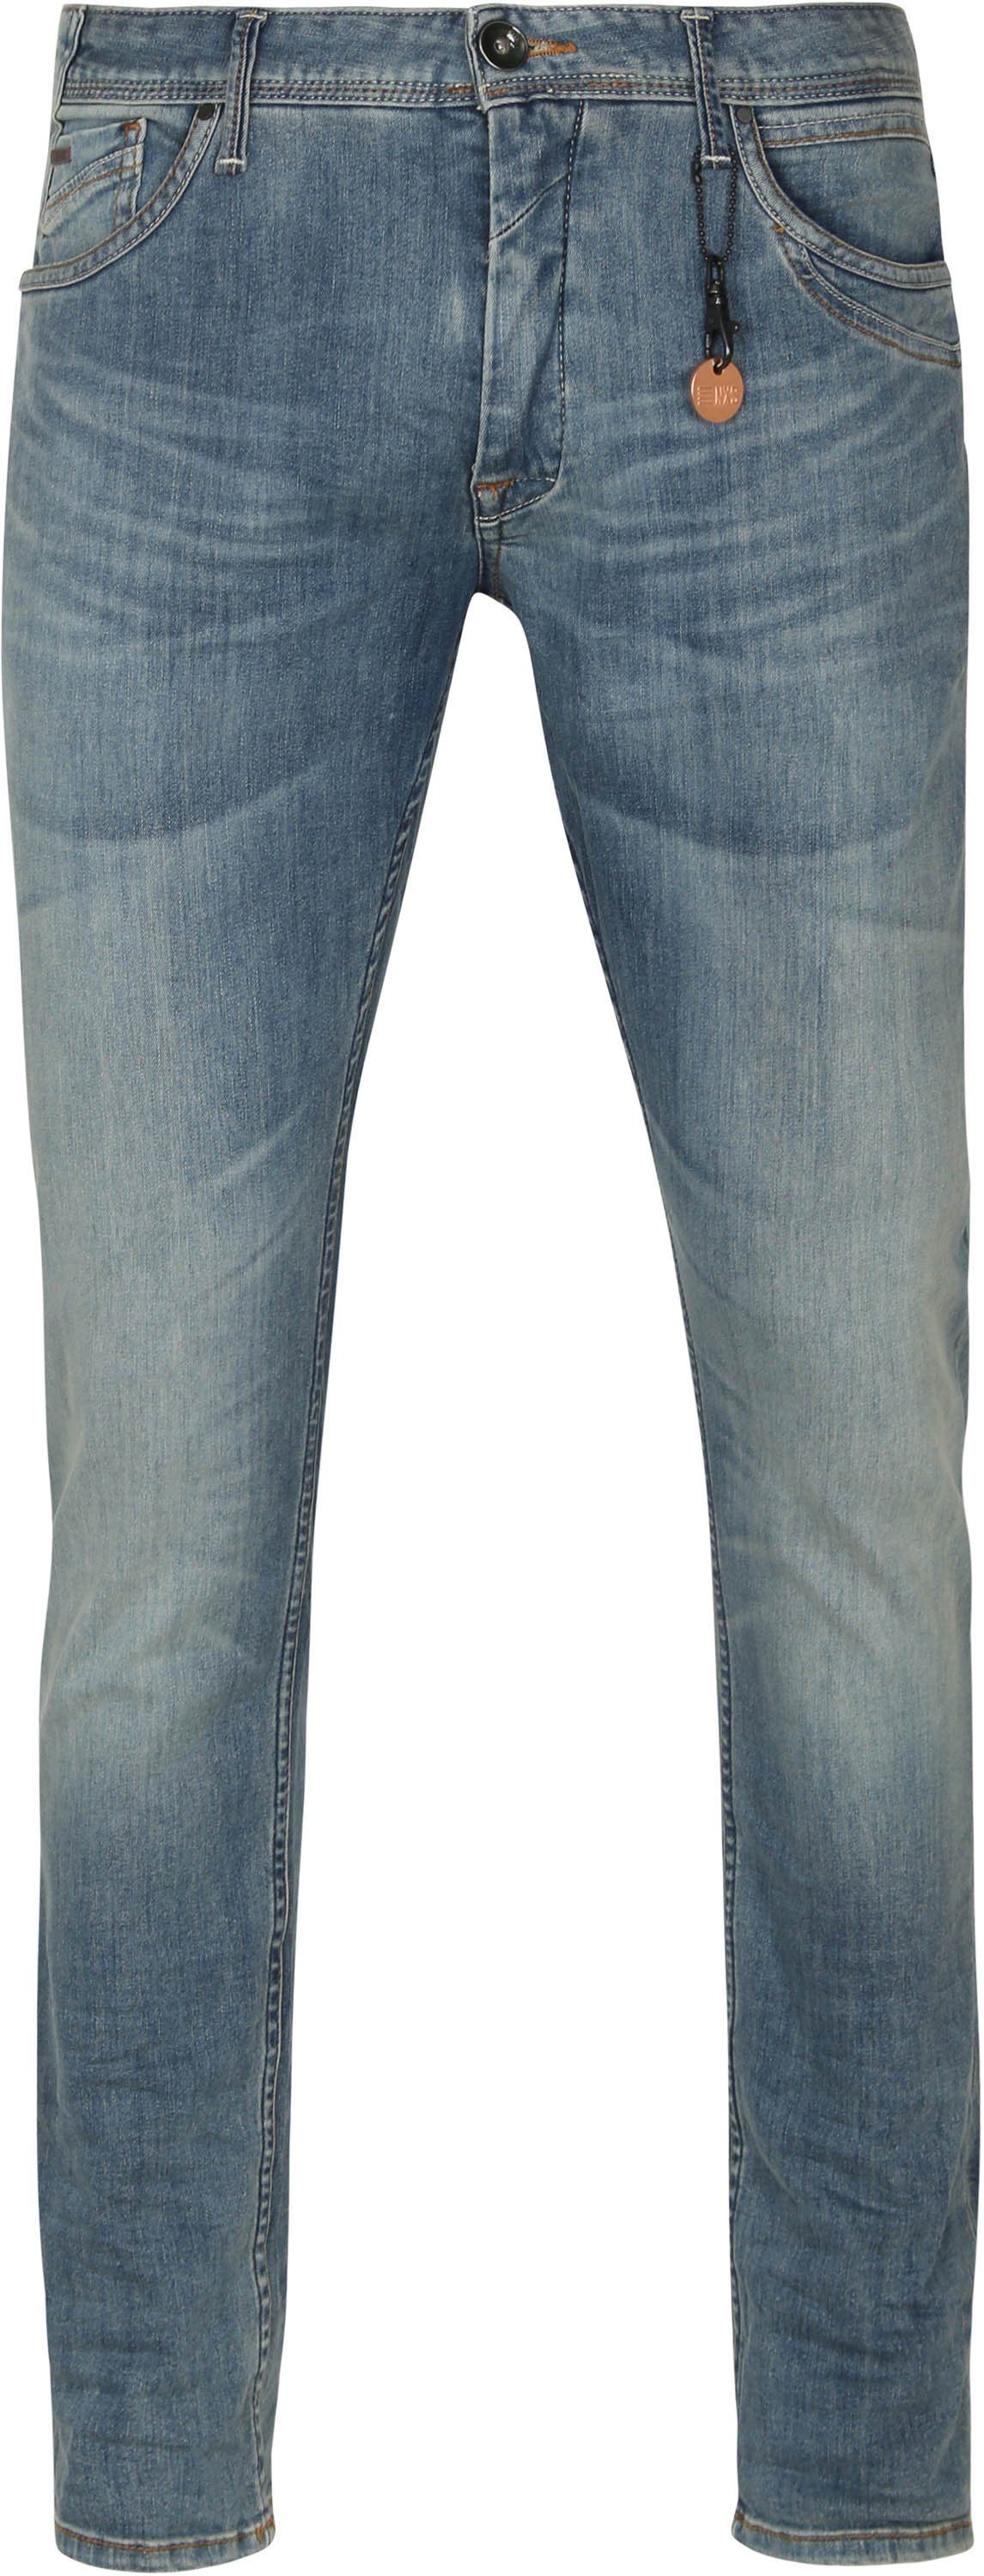 No-Excess Jeans 712 Bleach Denim Blue size W 30